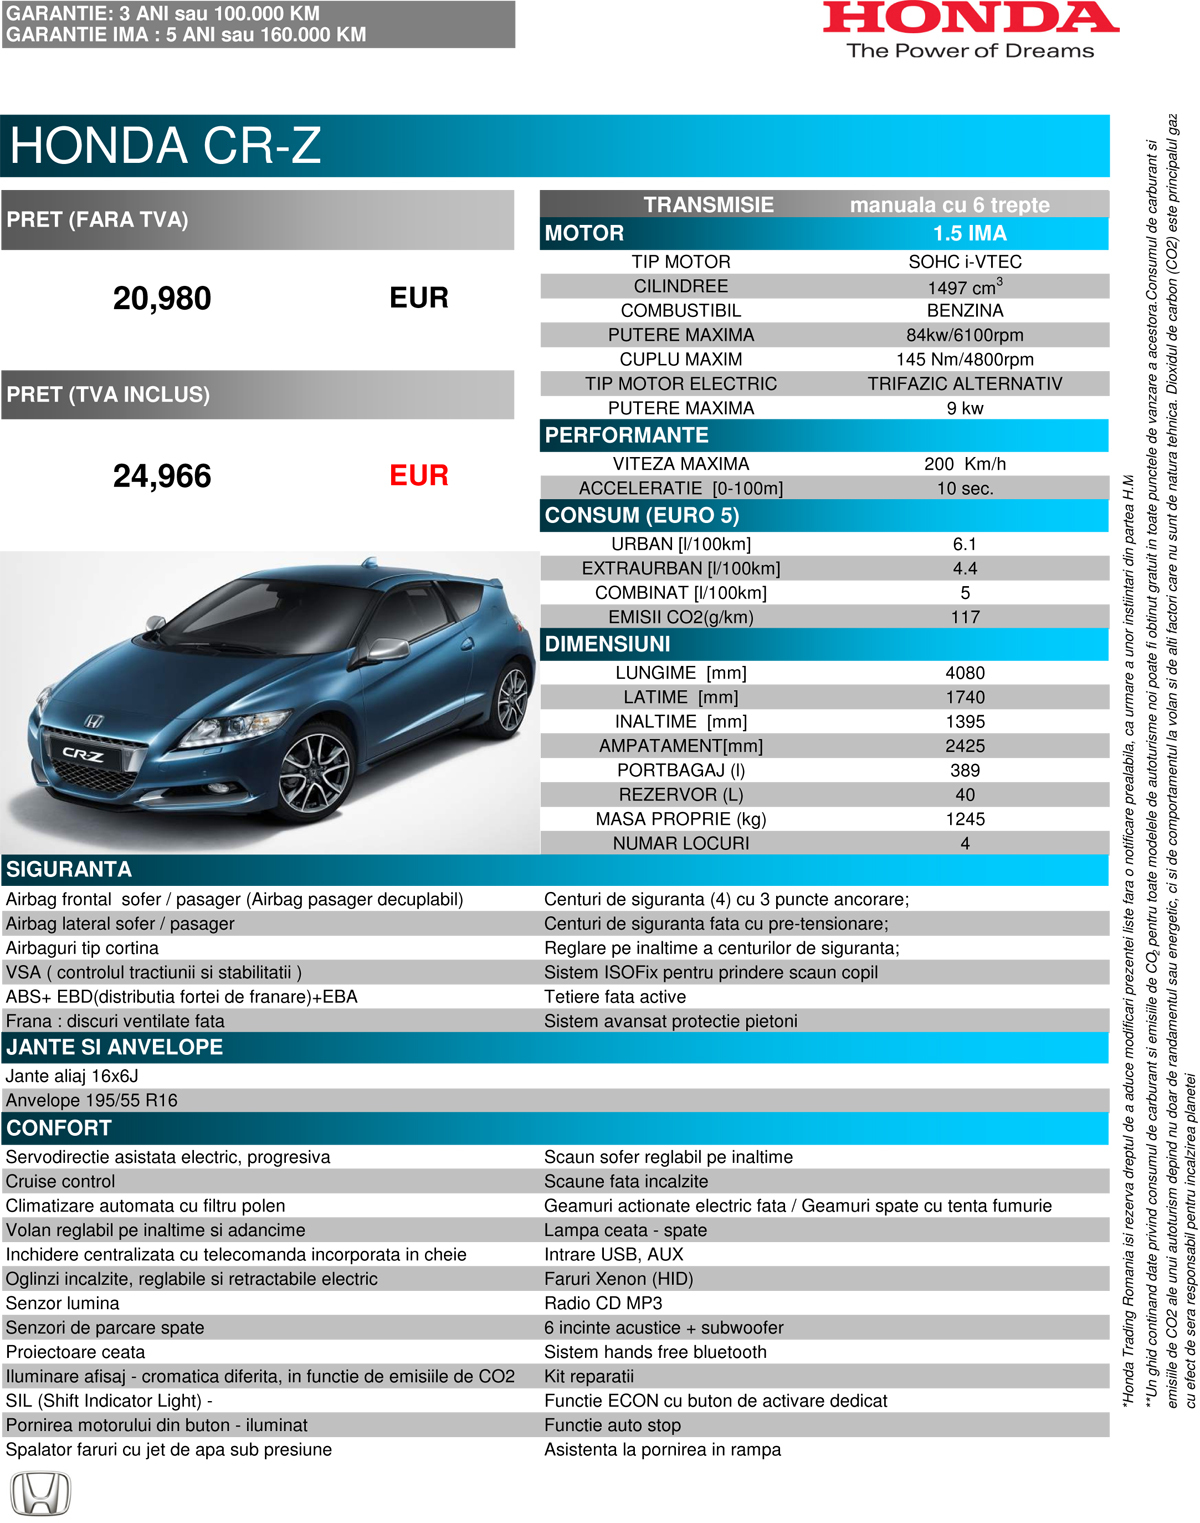 Noua Honda CR-Z are un pret de aproape 25.000 euro si va fi vanduta in doar 10 exemplare in Romania